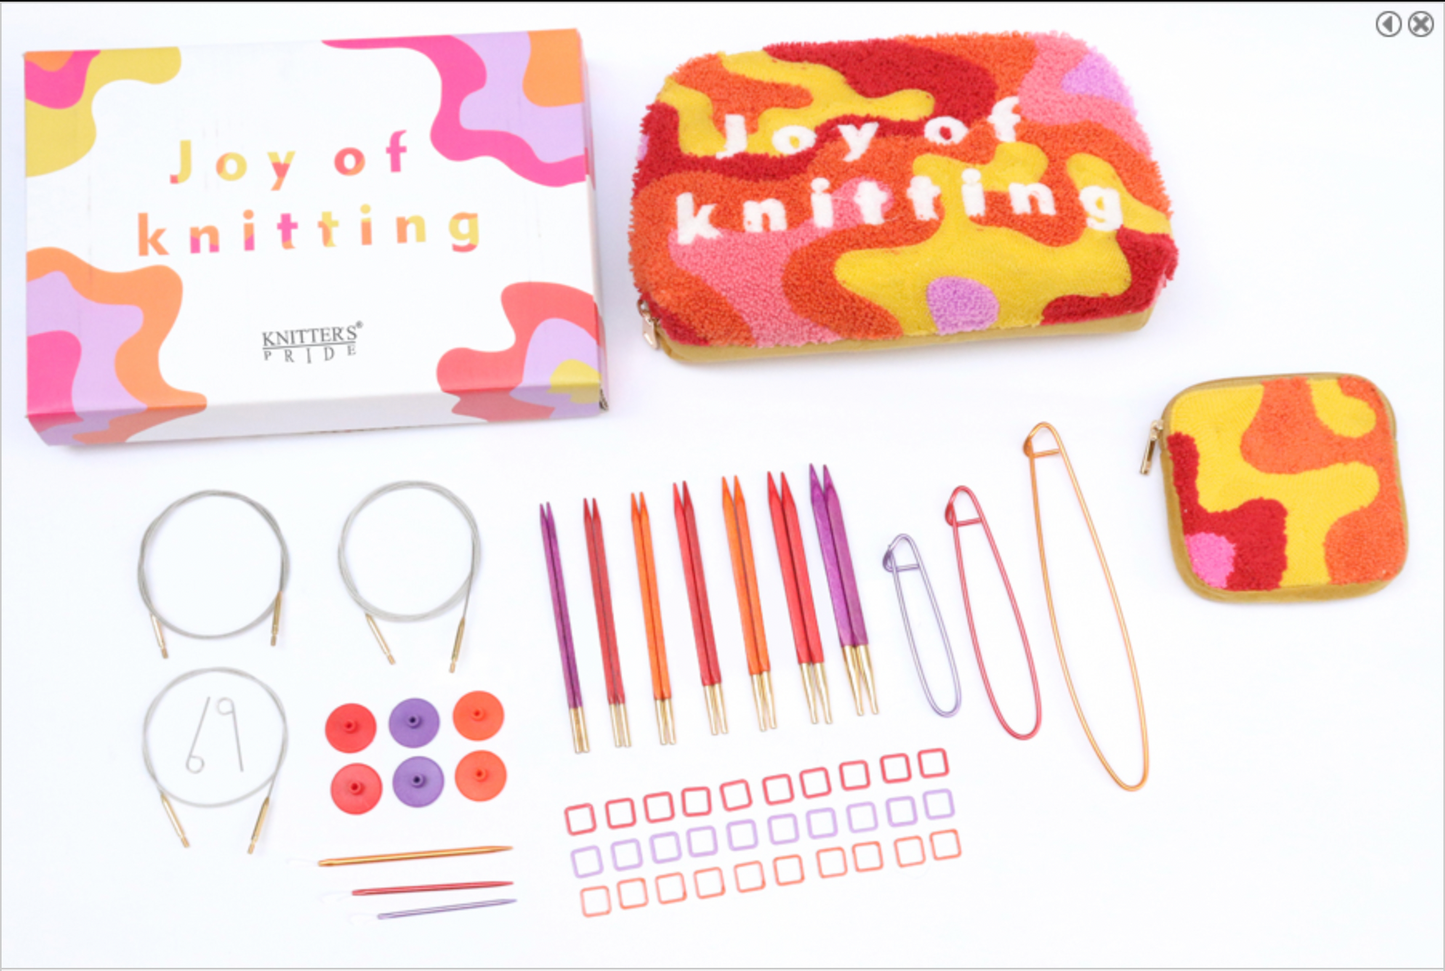 Knitters Pride Joy of Knitting Limited Edition Needle Set